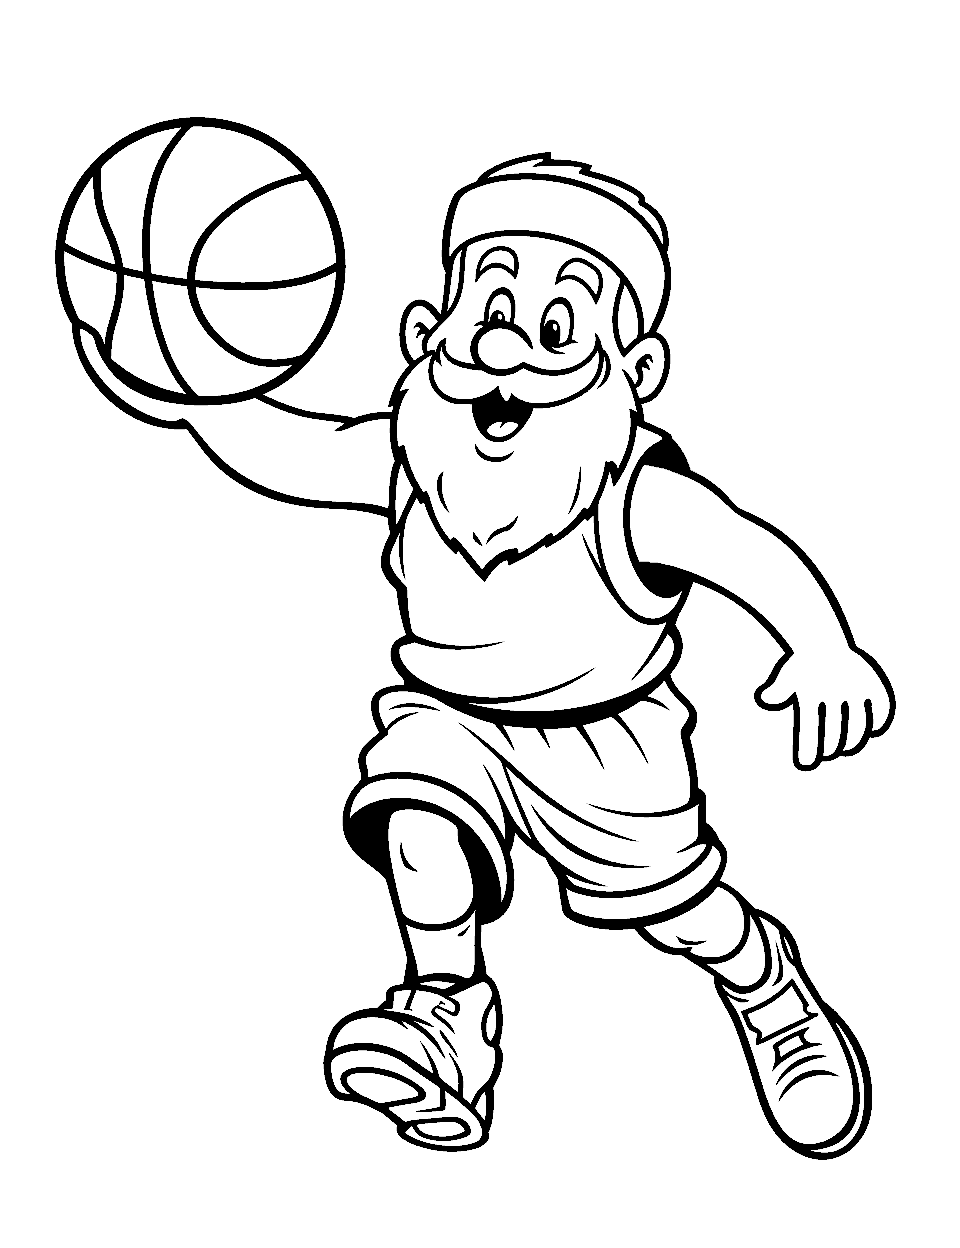 Christmas Basketball Fun Coloring Page - Santa Claus playing basketball, wearing athletic clothing and a headband.